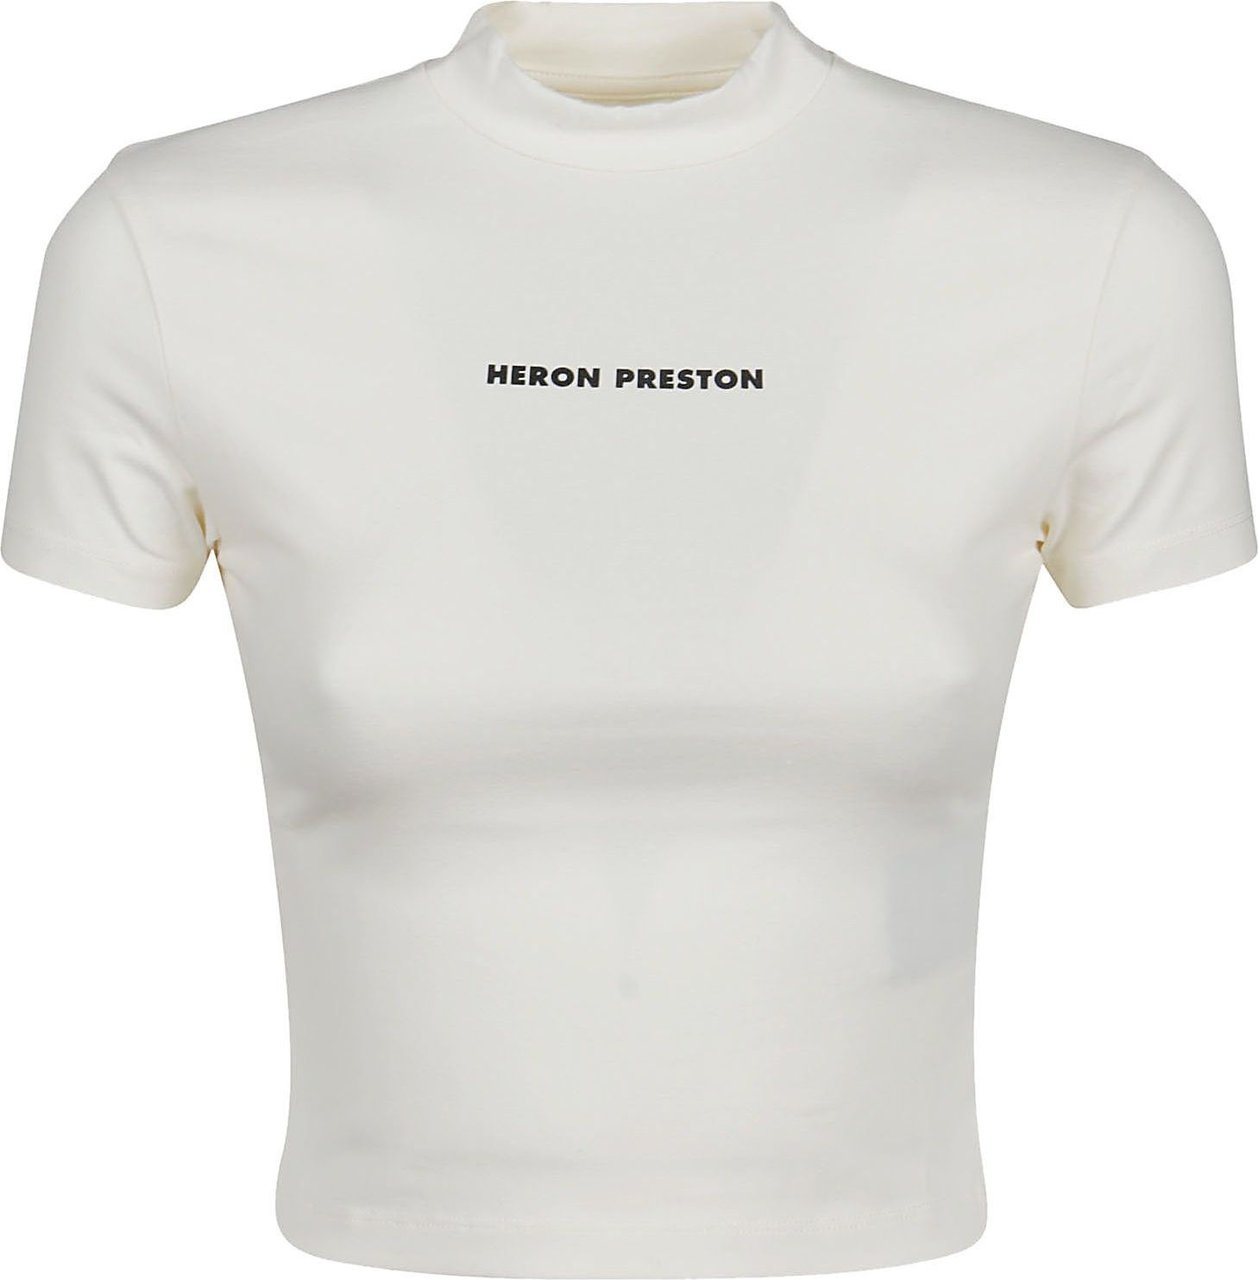 Heron Preston Baby T-shirt White Wit